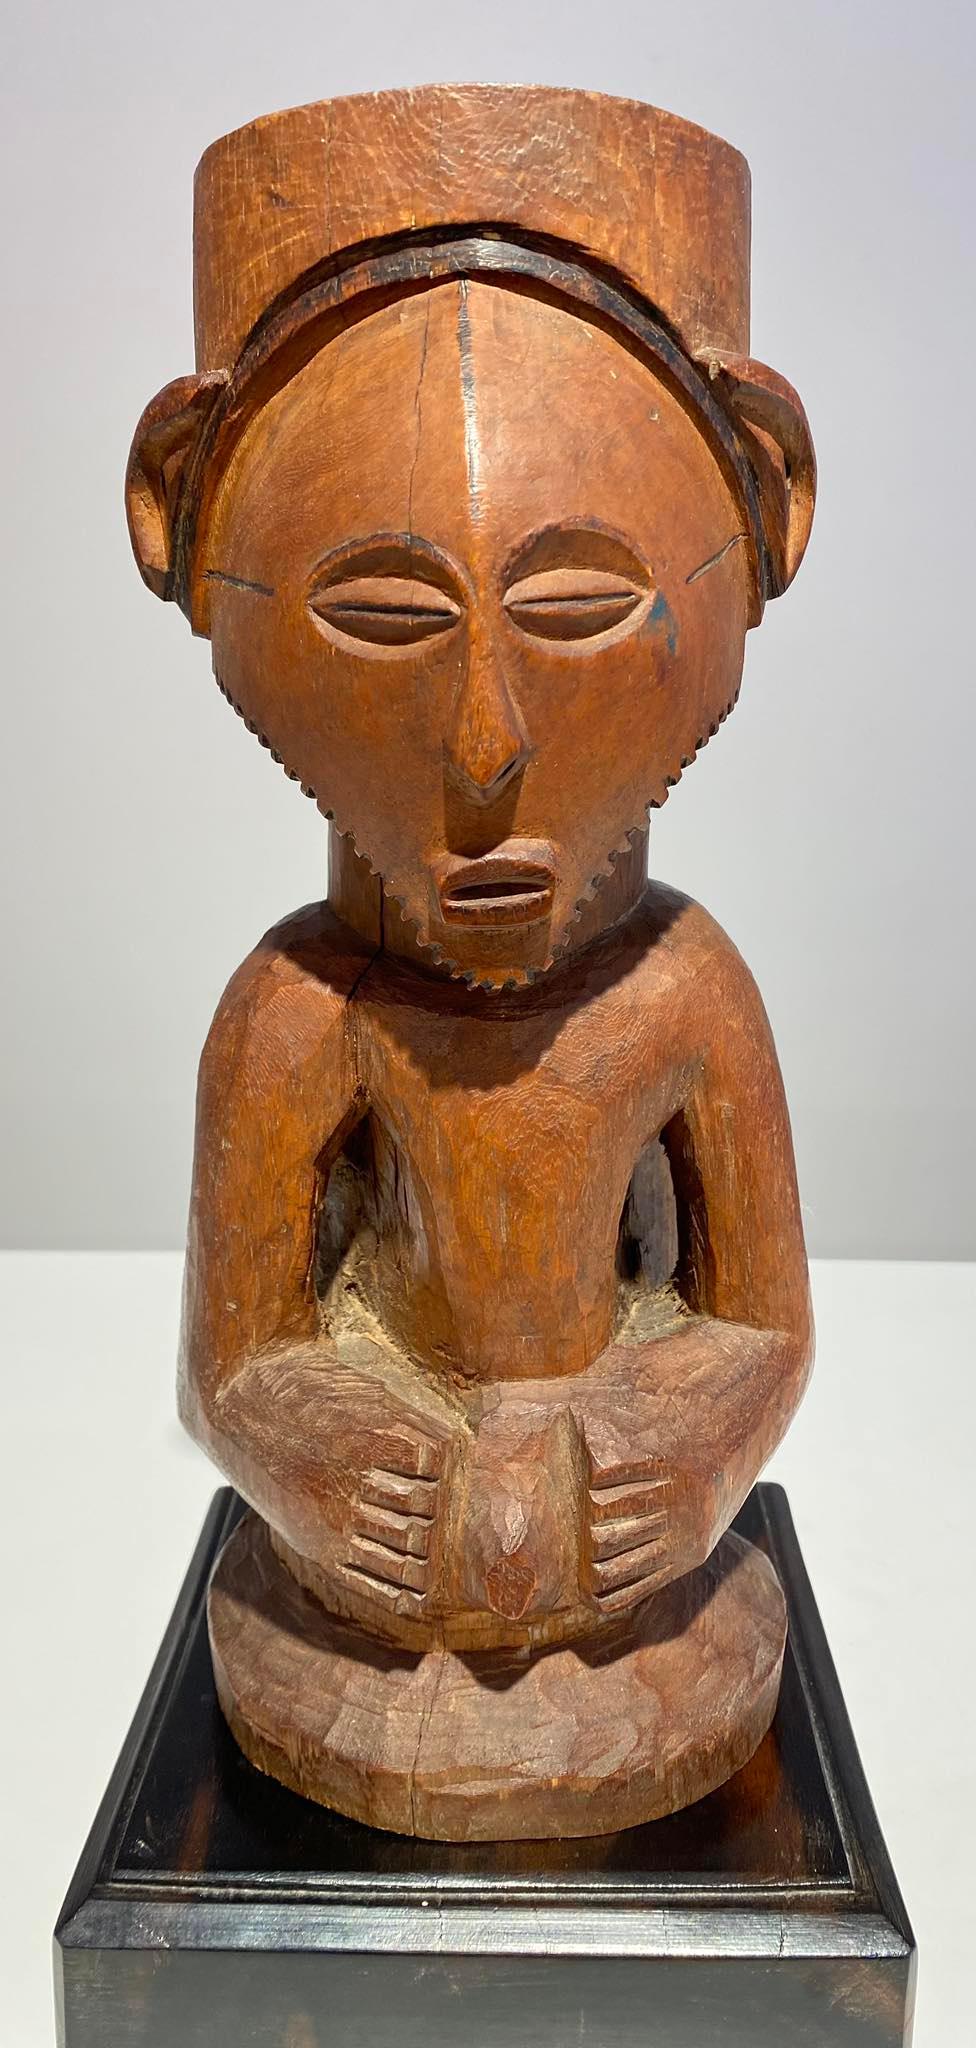 Kusu wooden ancestor fetish ca 1900 DR Congo Africa Central African Tribal Art For Sale 9